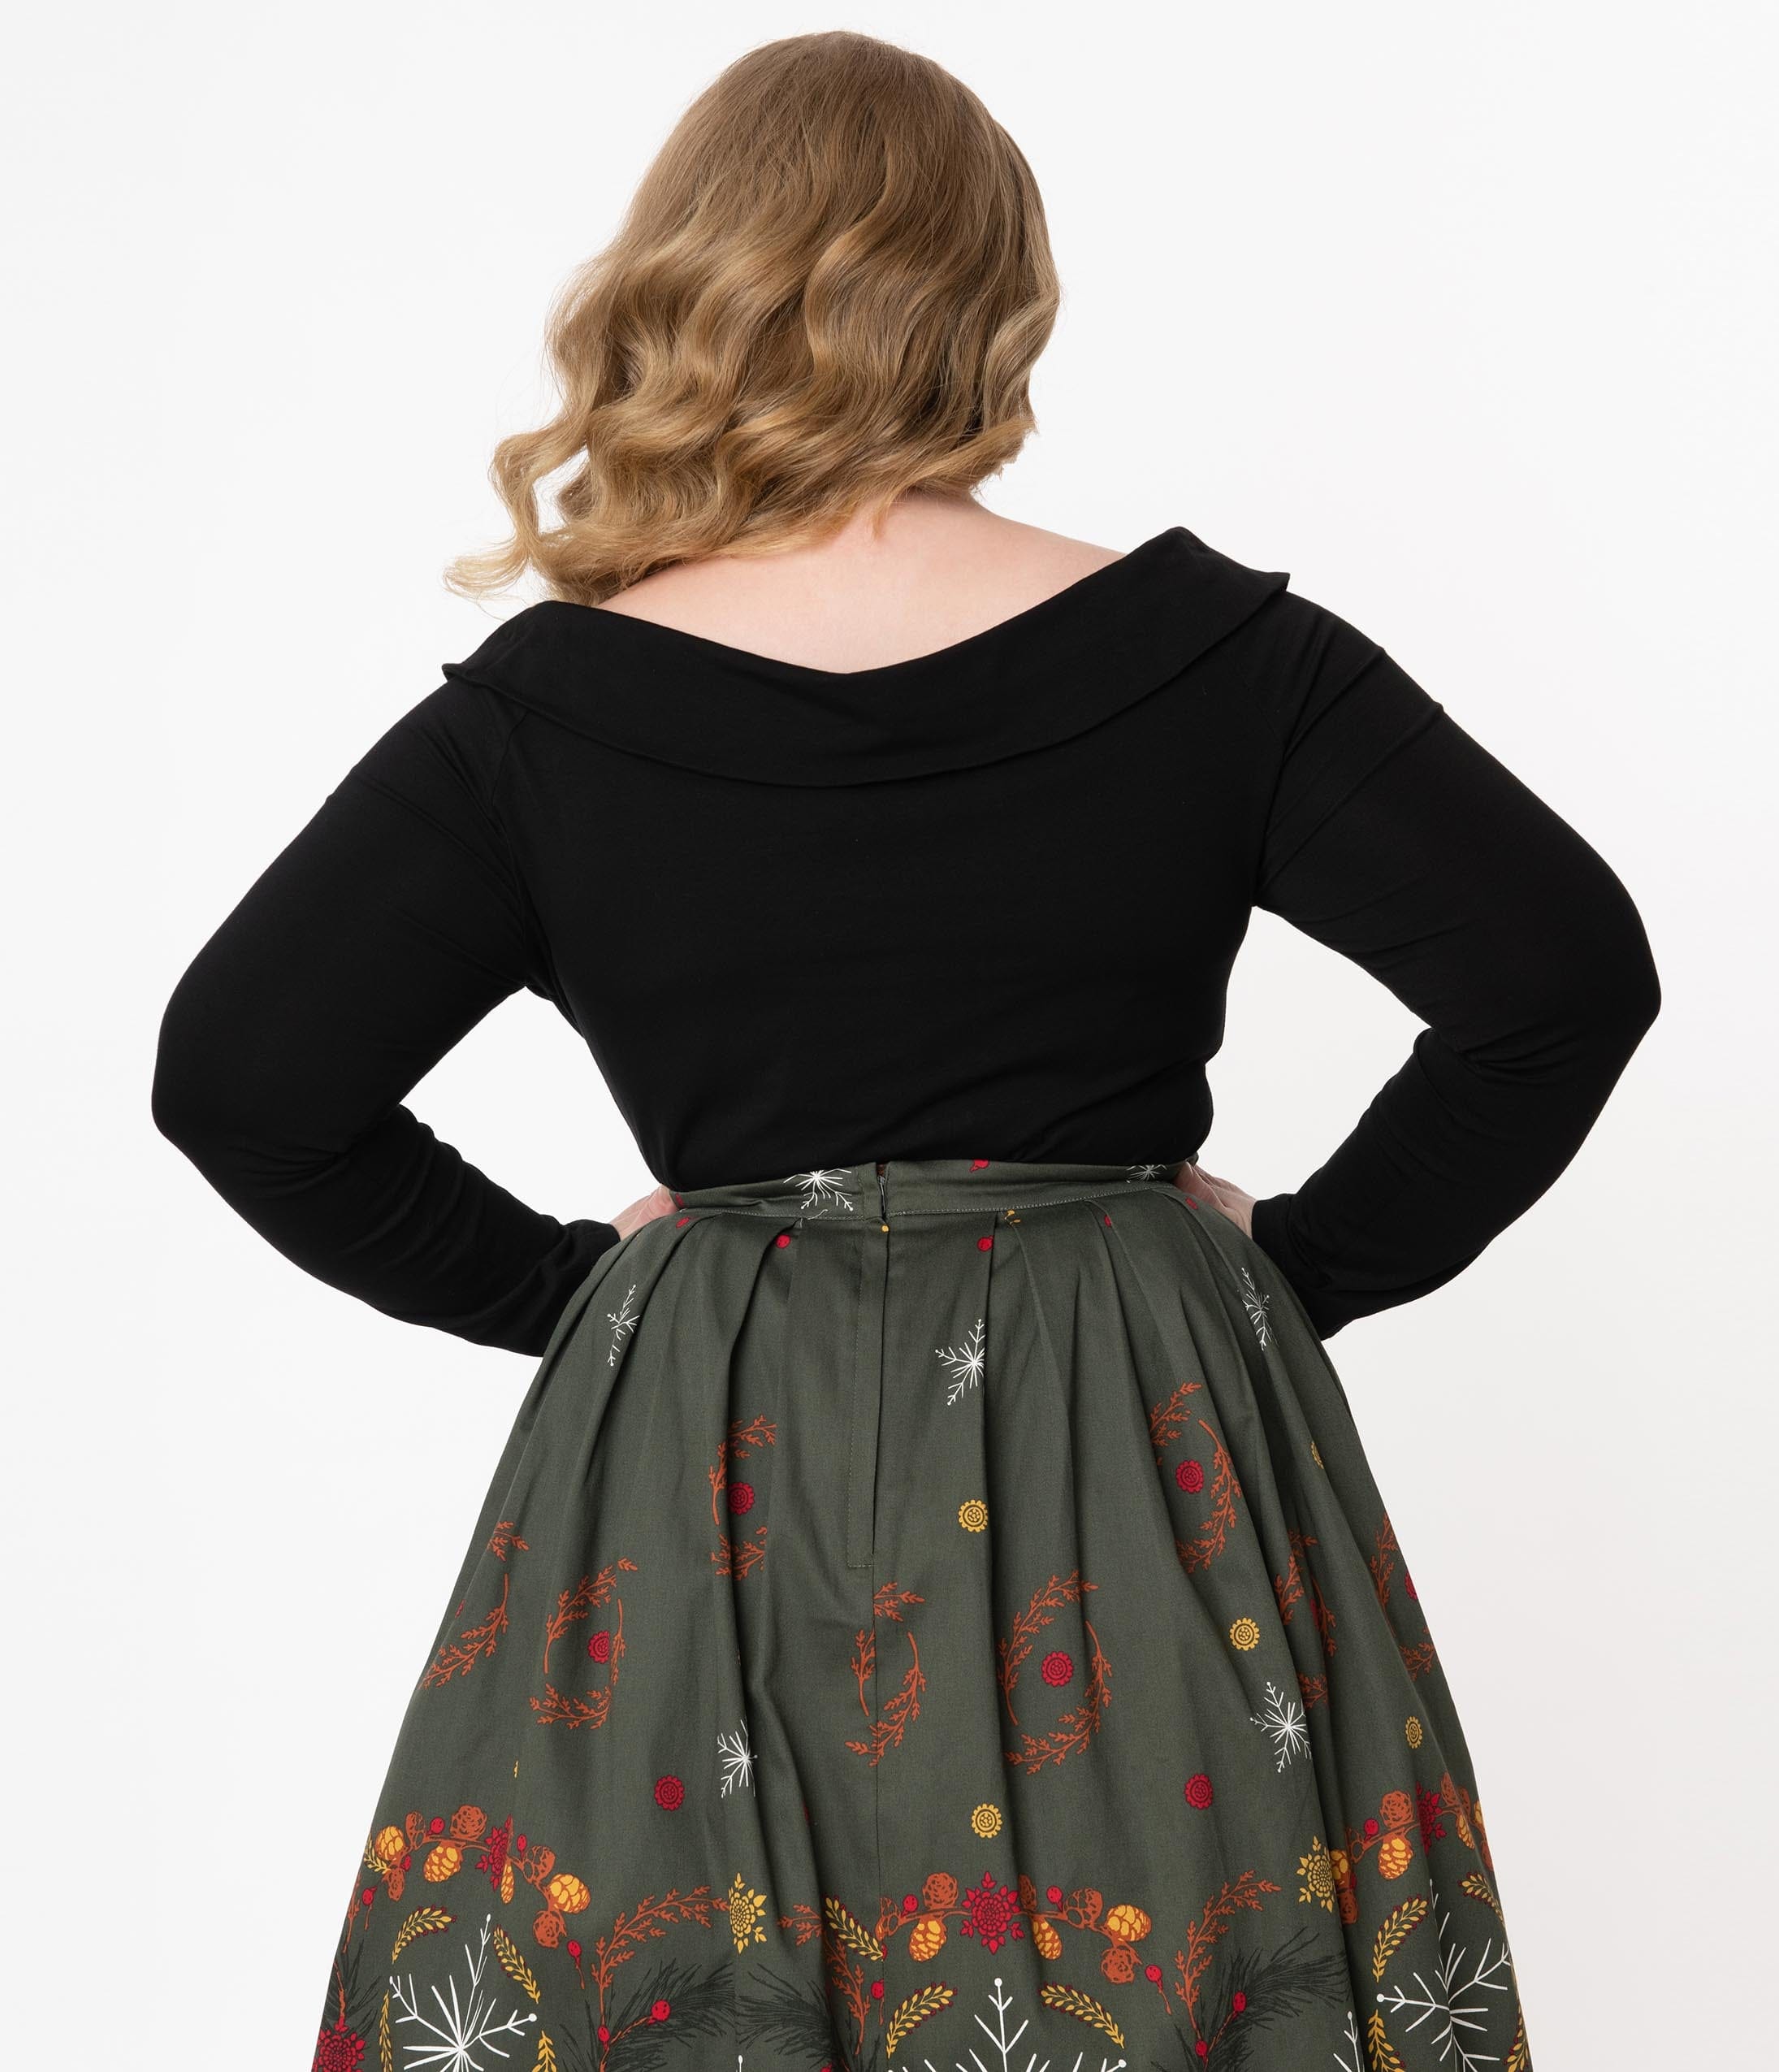 50s fold over bardot dress